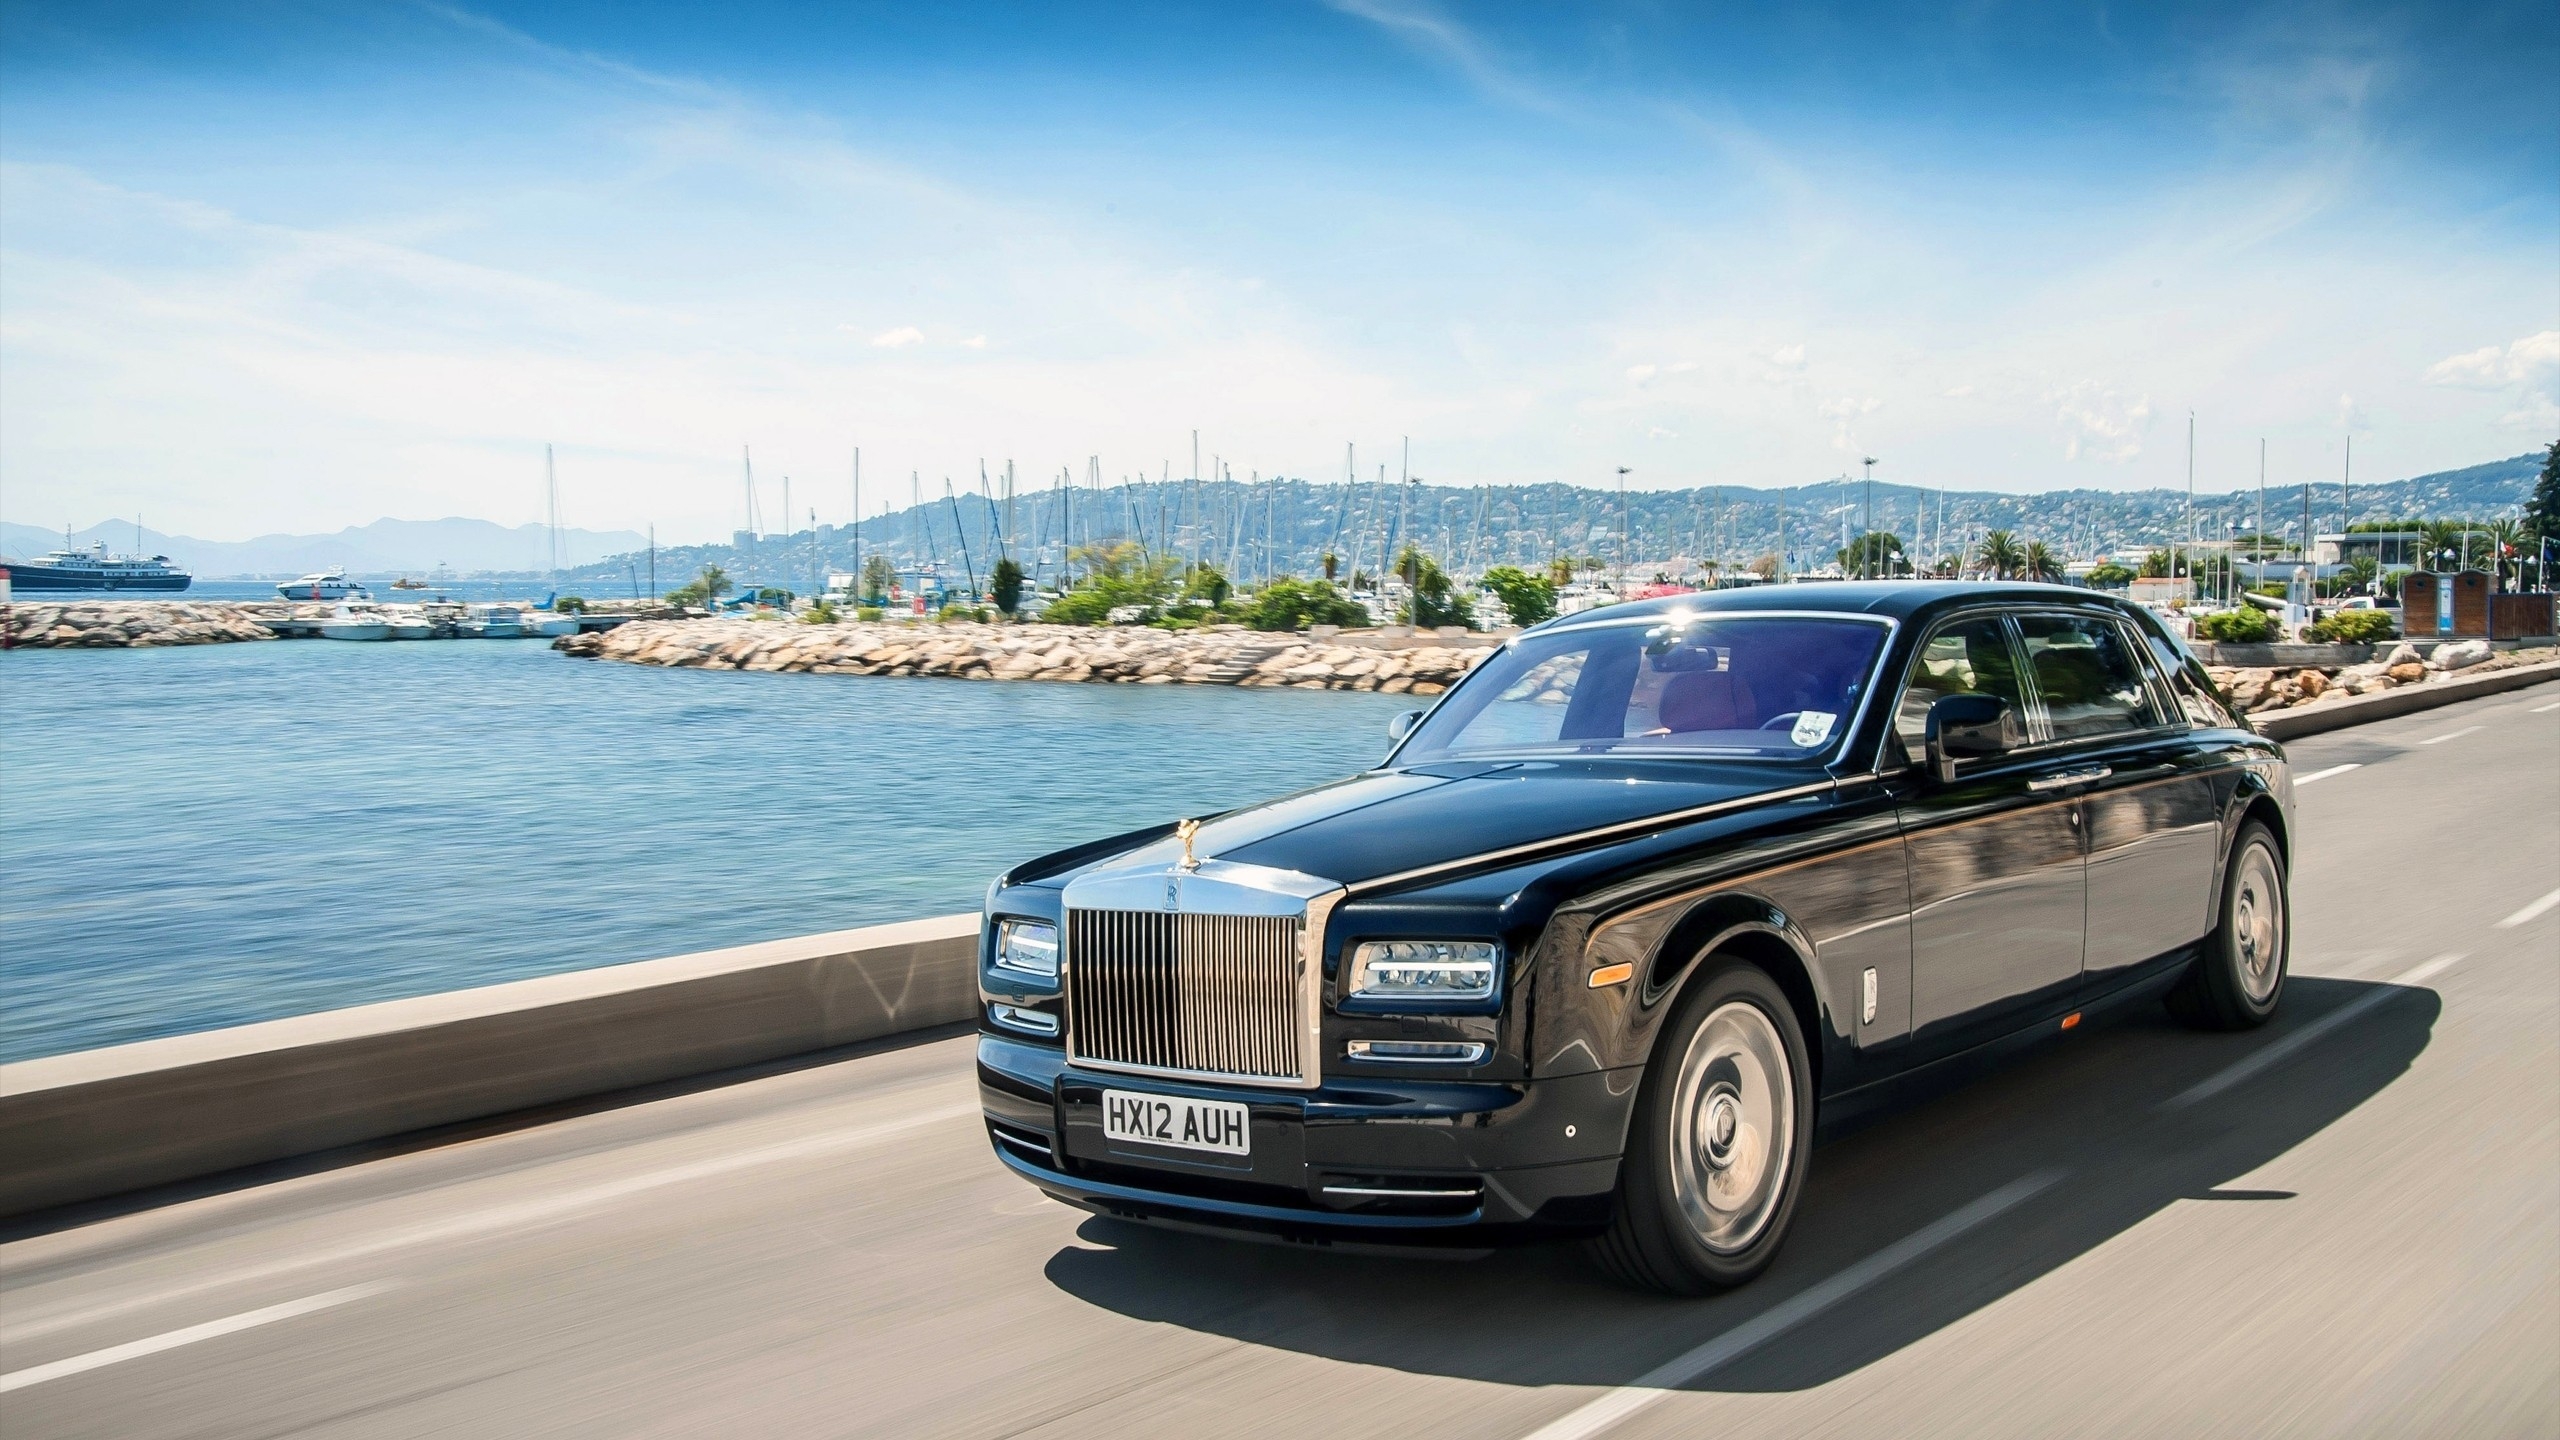 Stunning Rolls Royce for 2560x1440 HDTV resolution